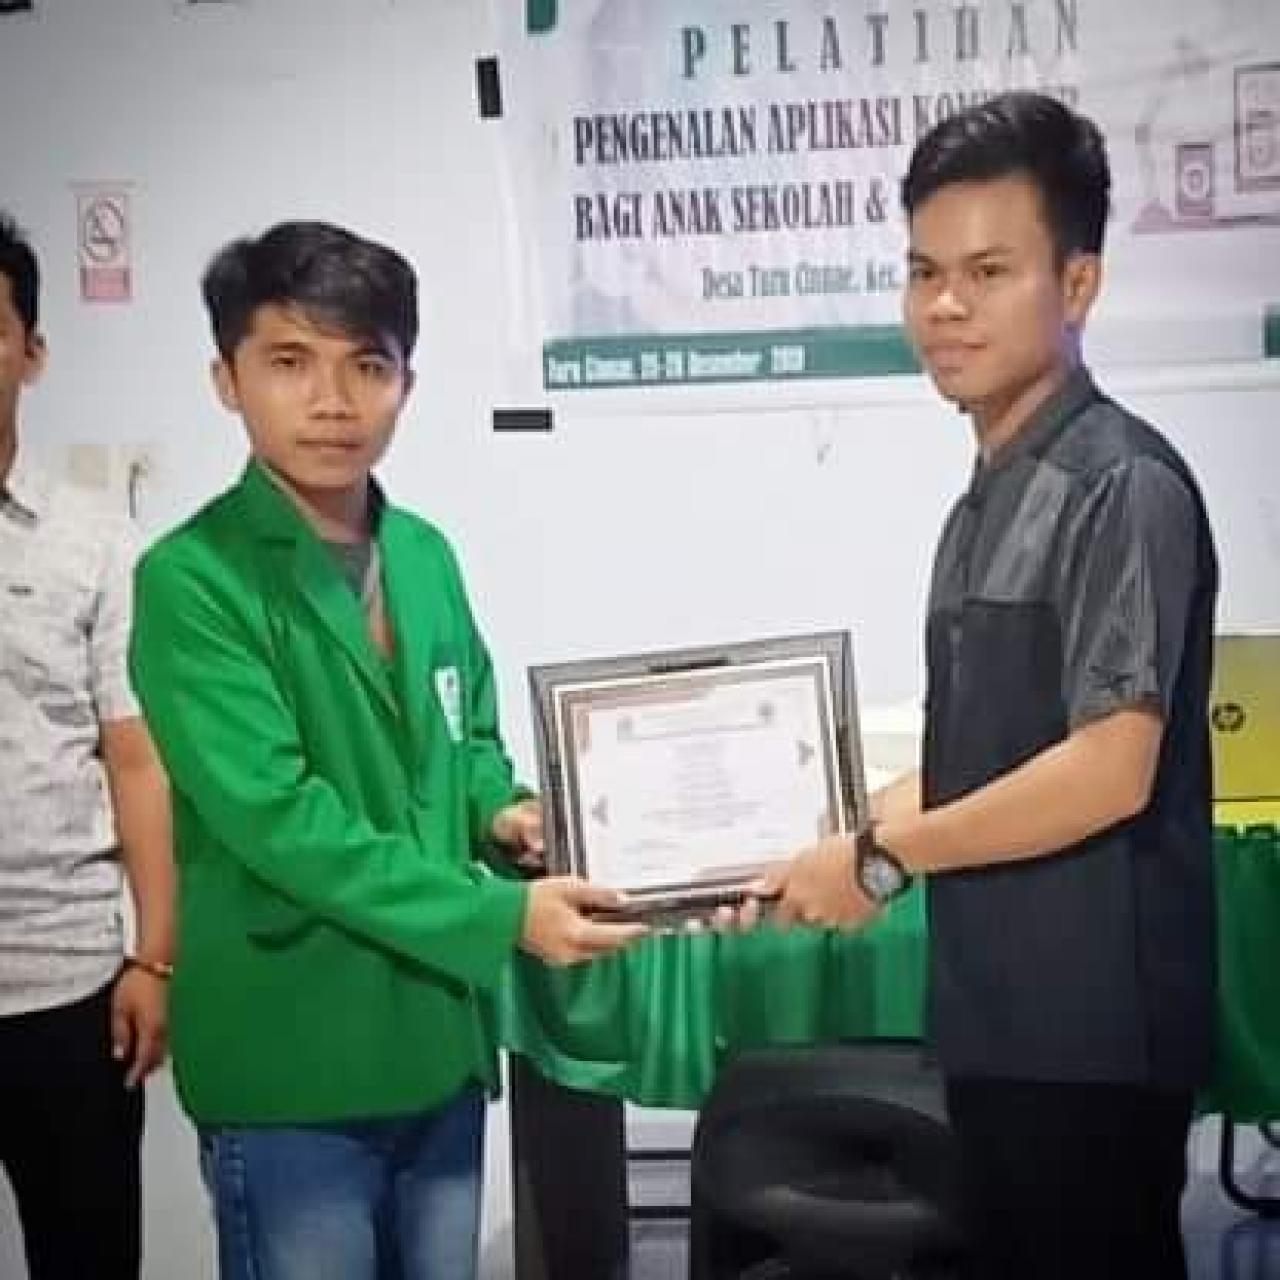 Gambar Mahasiswa KKN UIN Alauddin Gelar Pelatihan Pengenalan Aplikasi Komputer di Desa Cinnae Bone